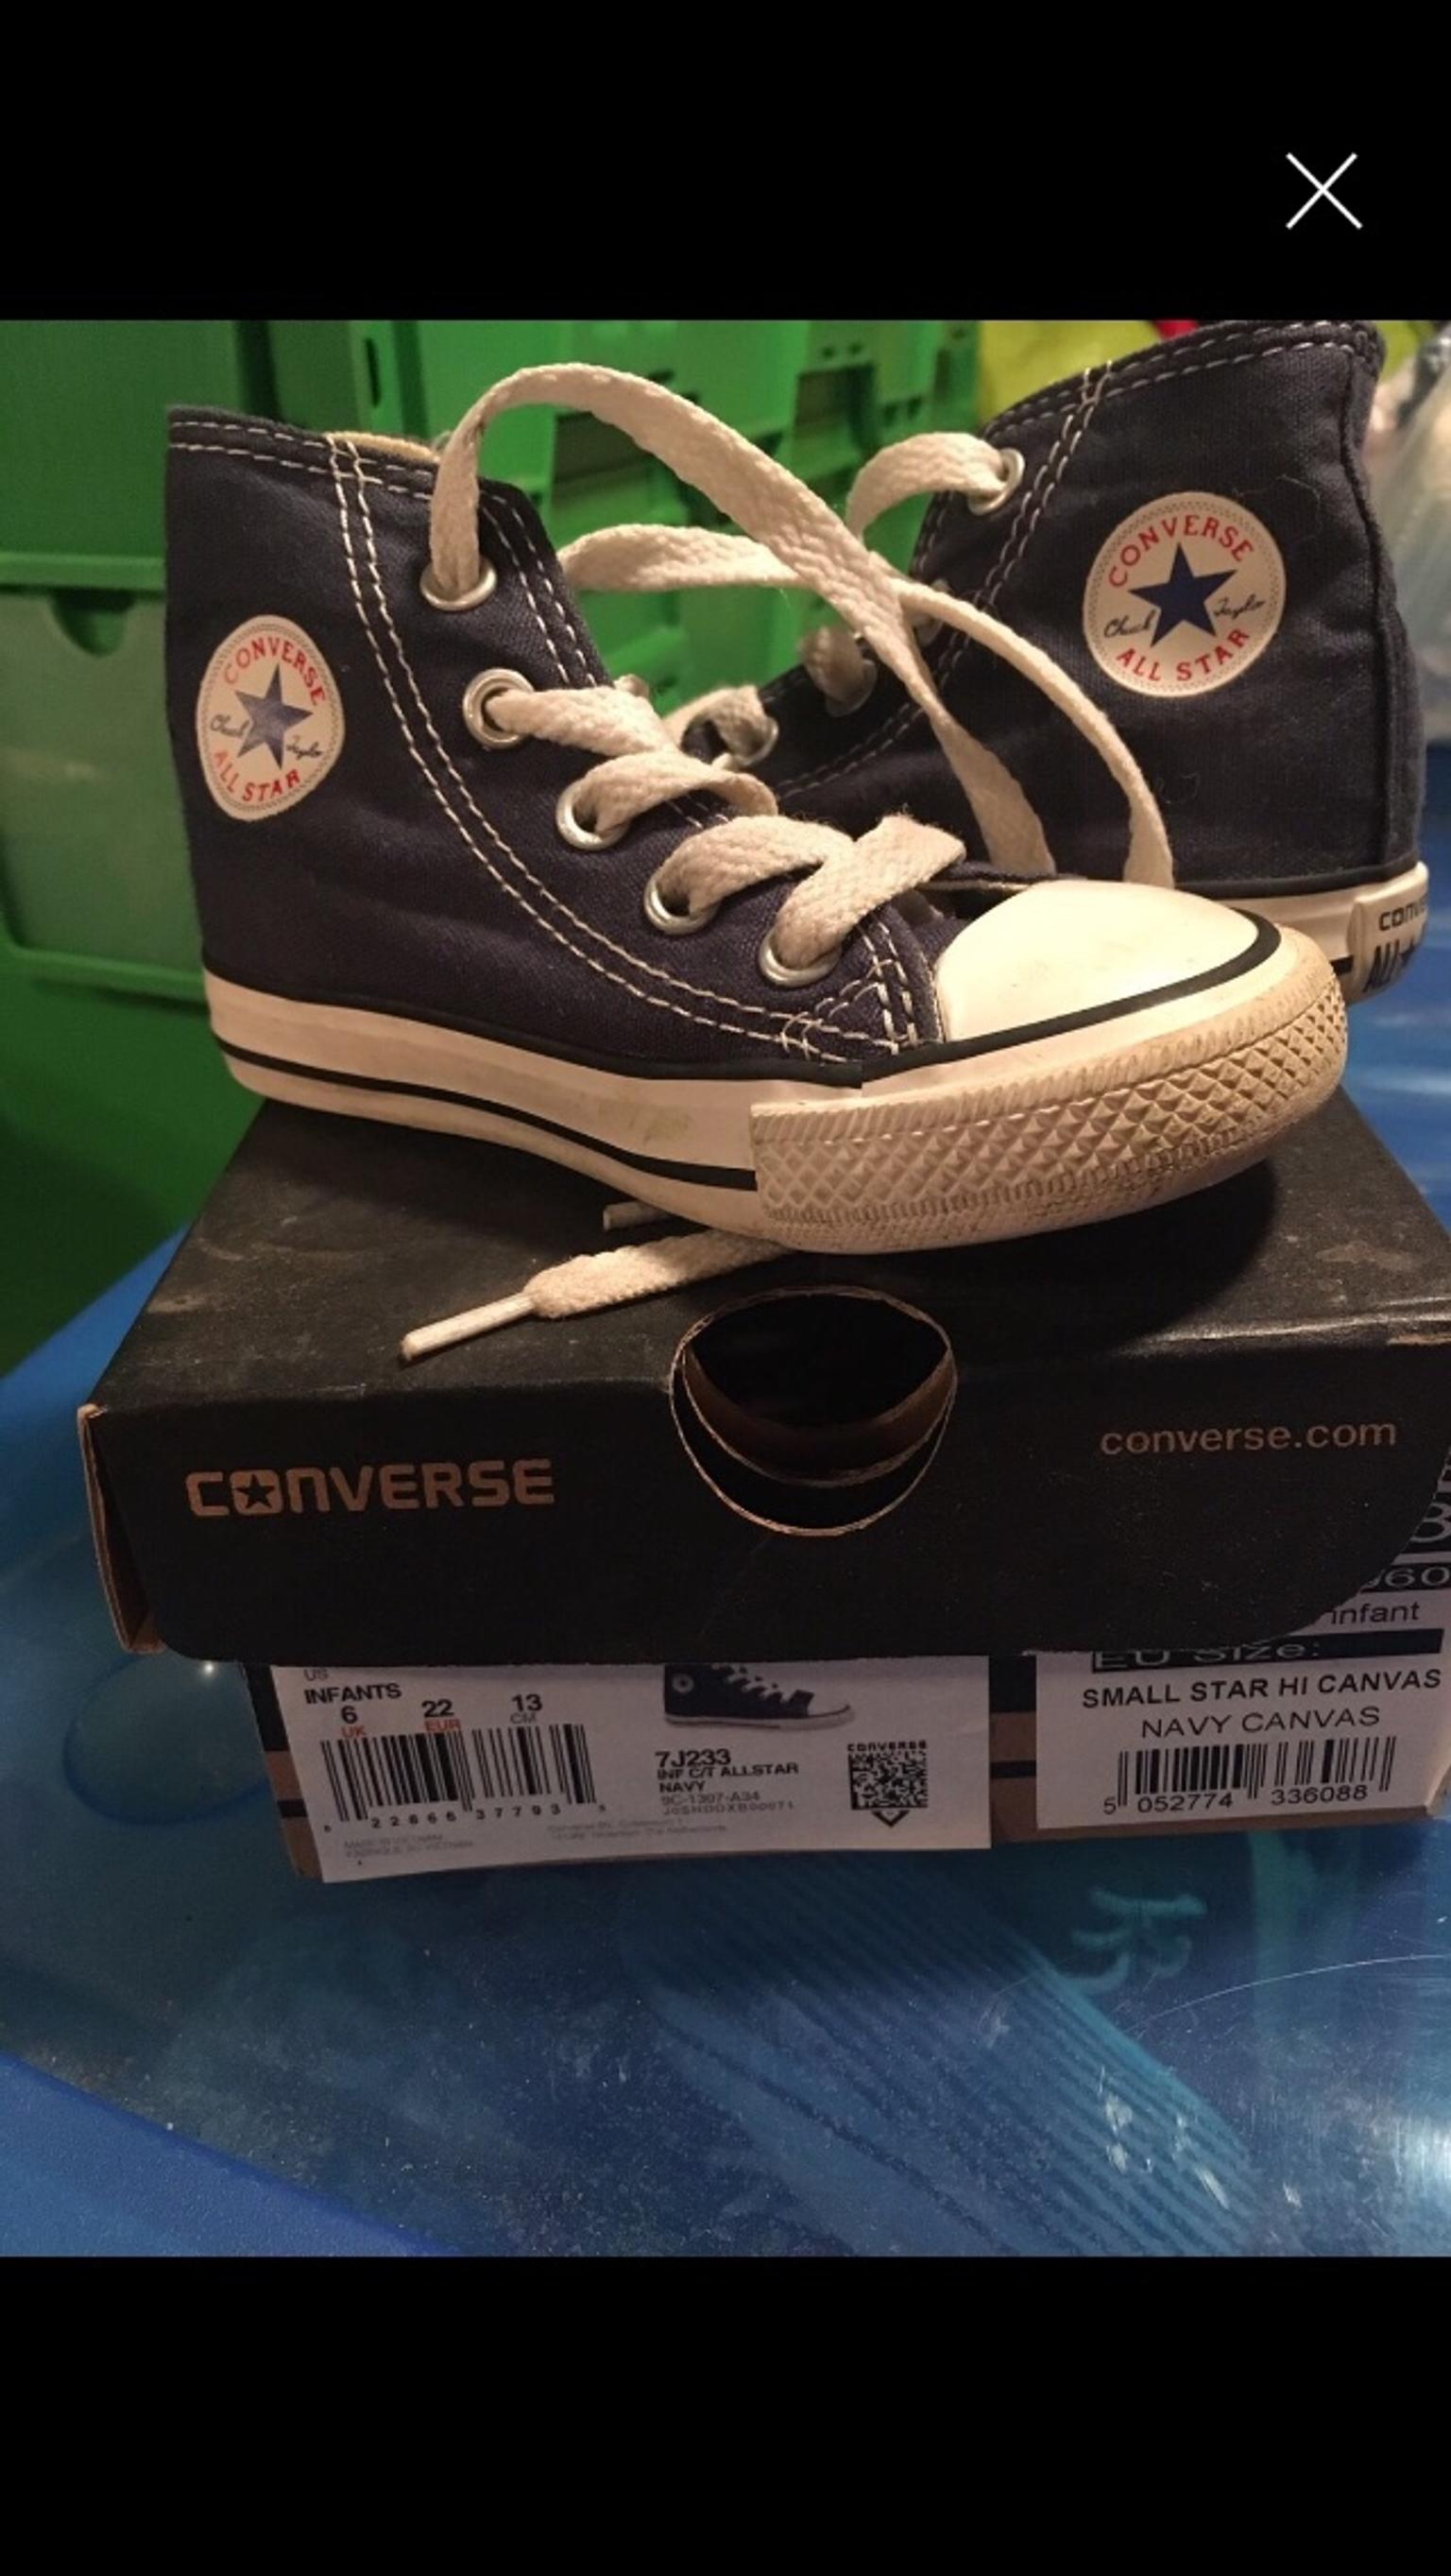 converse size 6